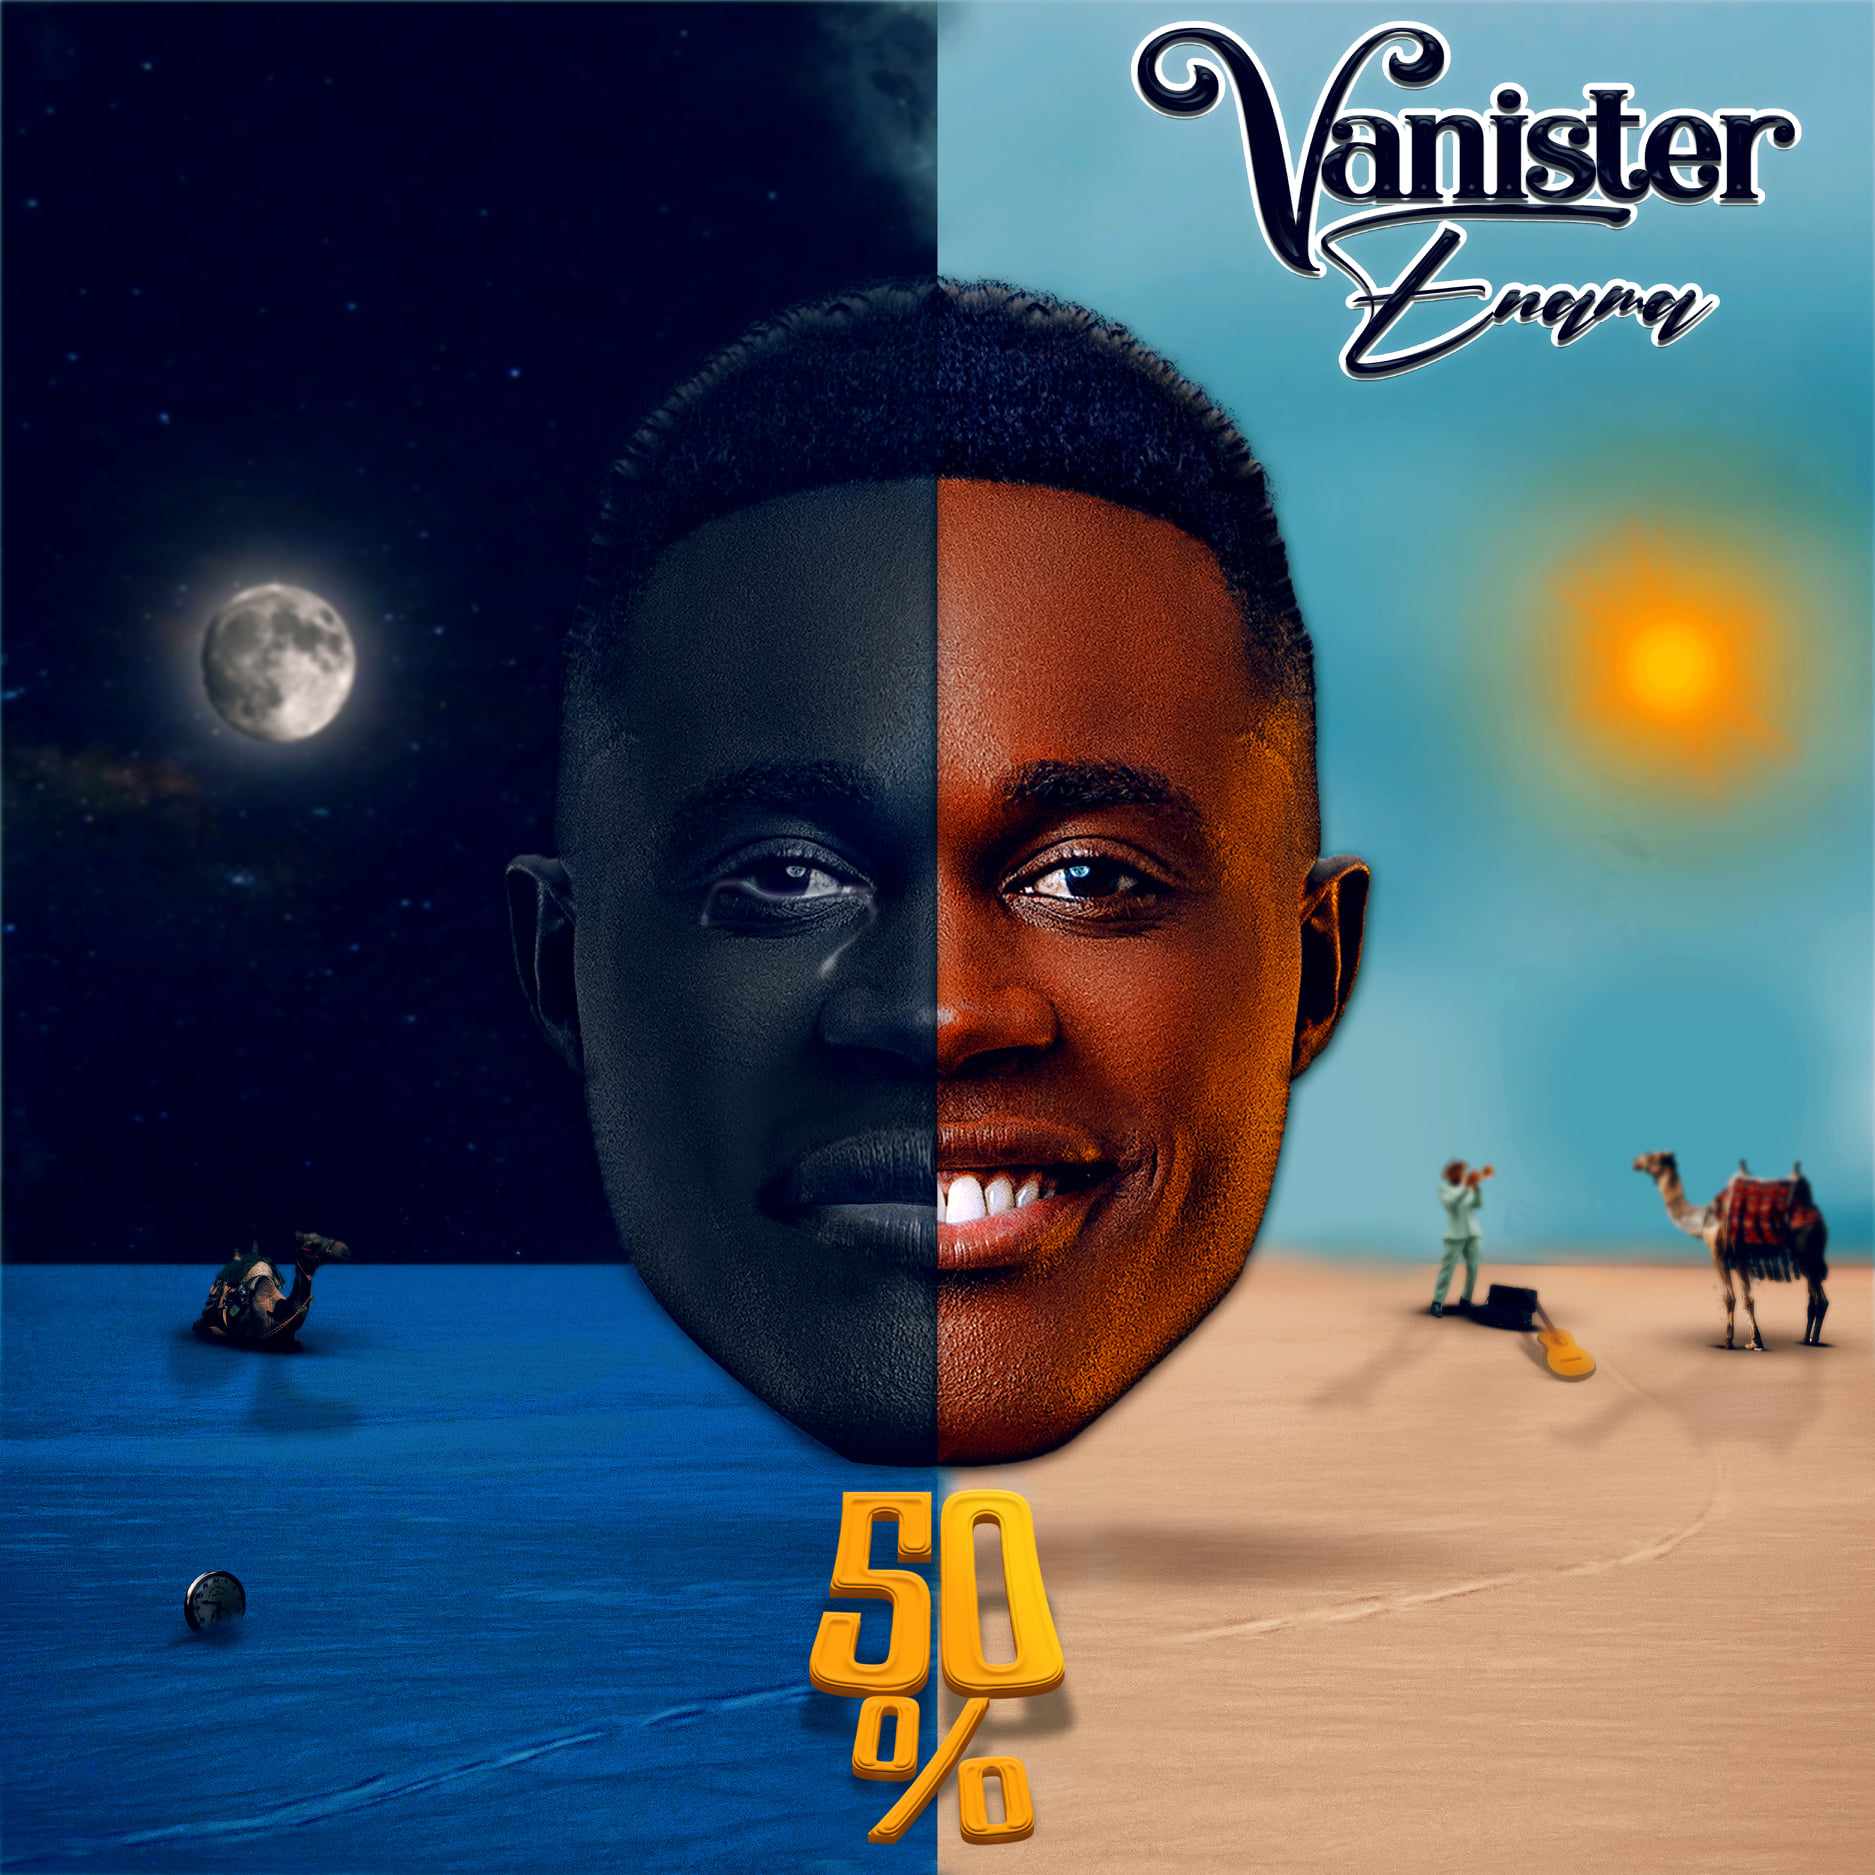 Pochette de l'album 50% de l'artiste Vanister Enama